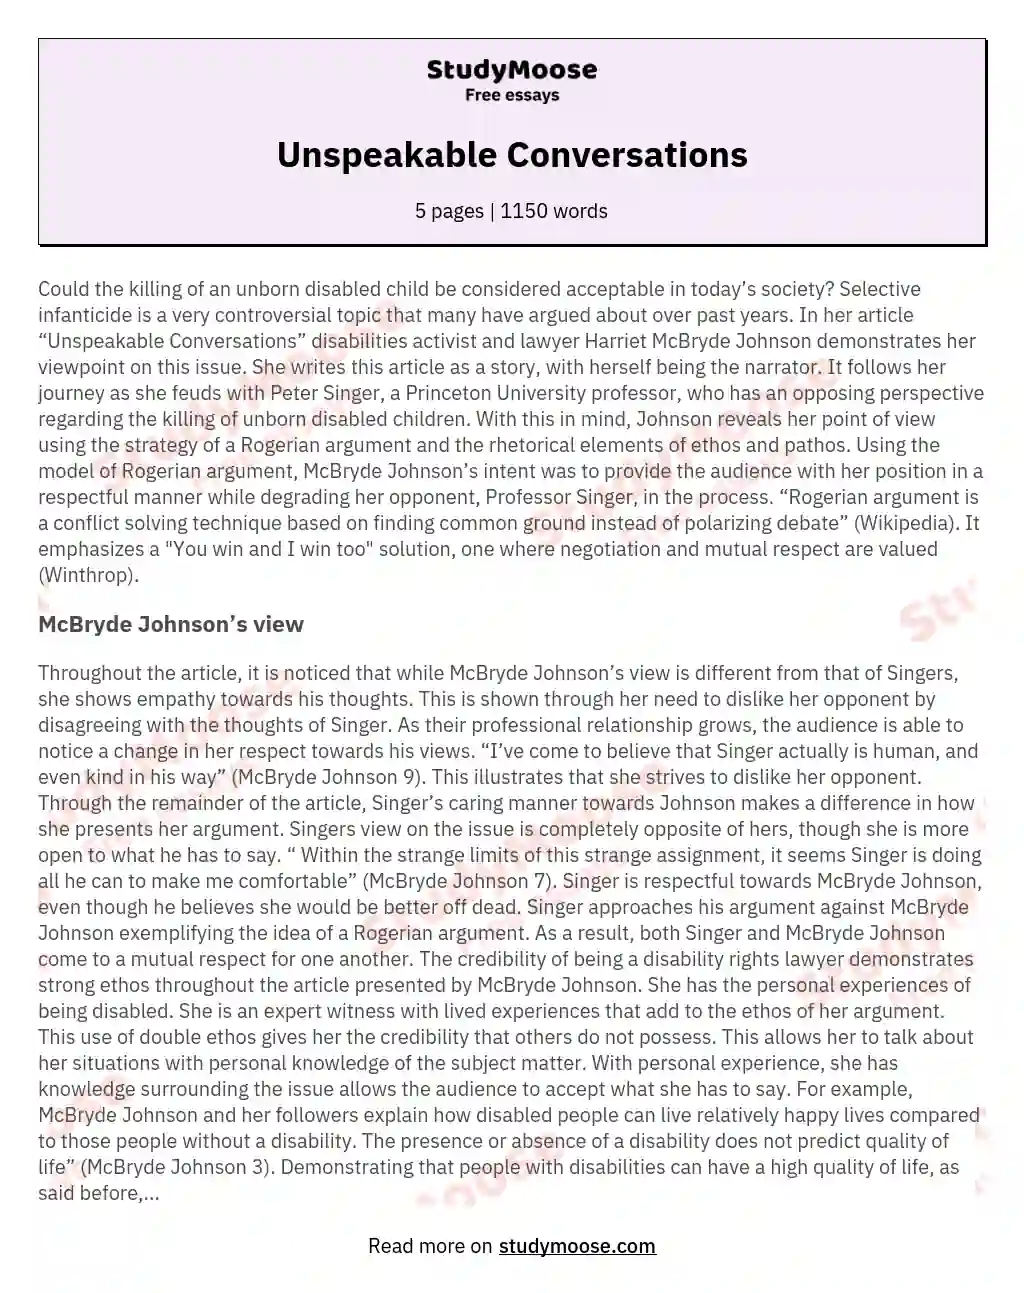 Unspeakable Conversations essay